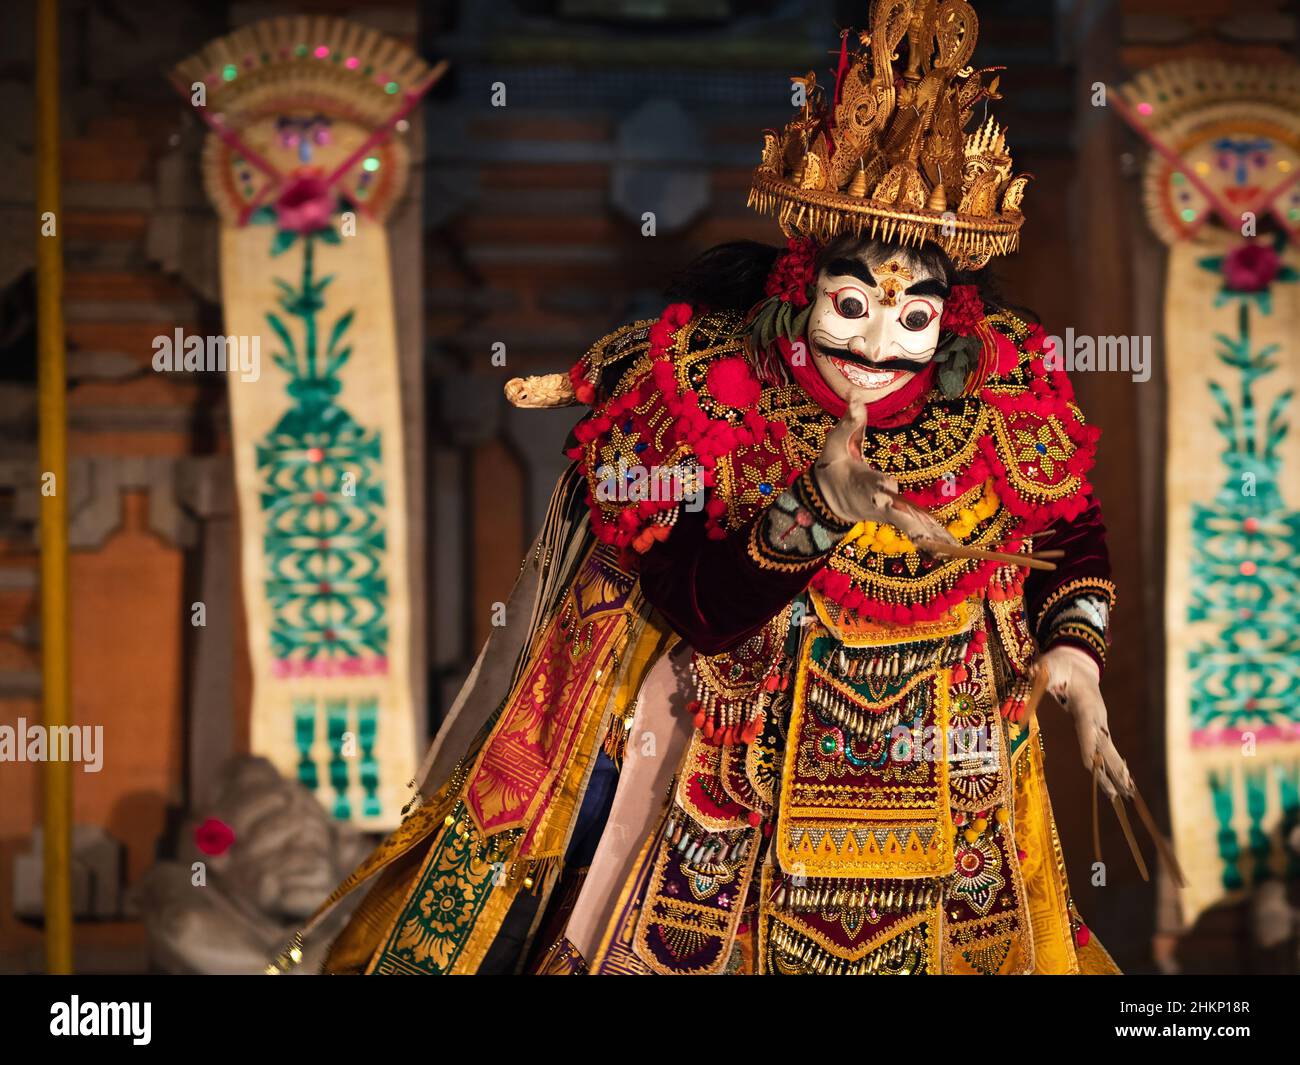 Balinese Topeng mask dance performance and ritual ceremony at Pura Saraswati temple in Ubud, Bali, Indonesia. Stock Photo